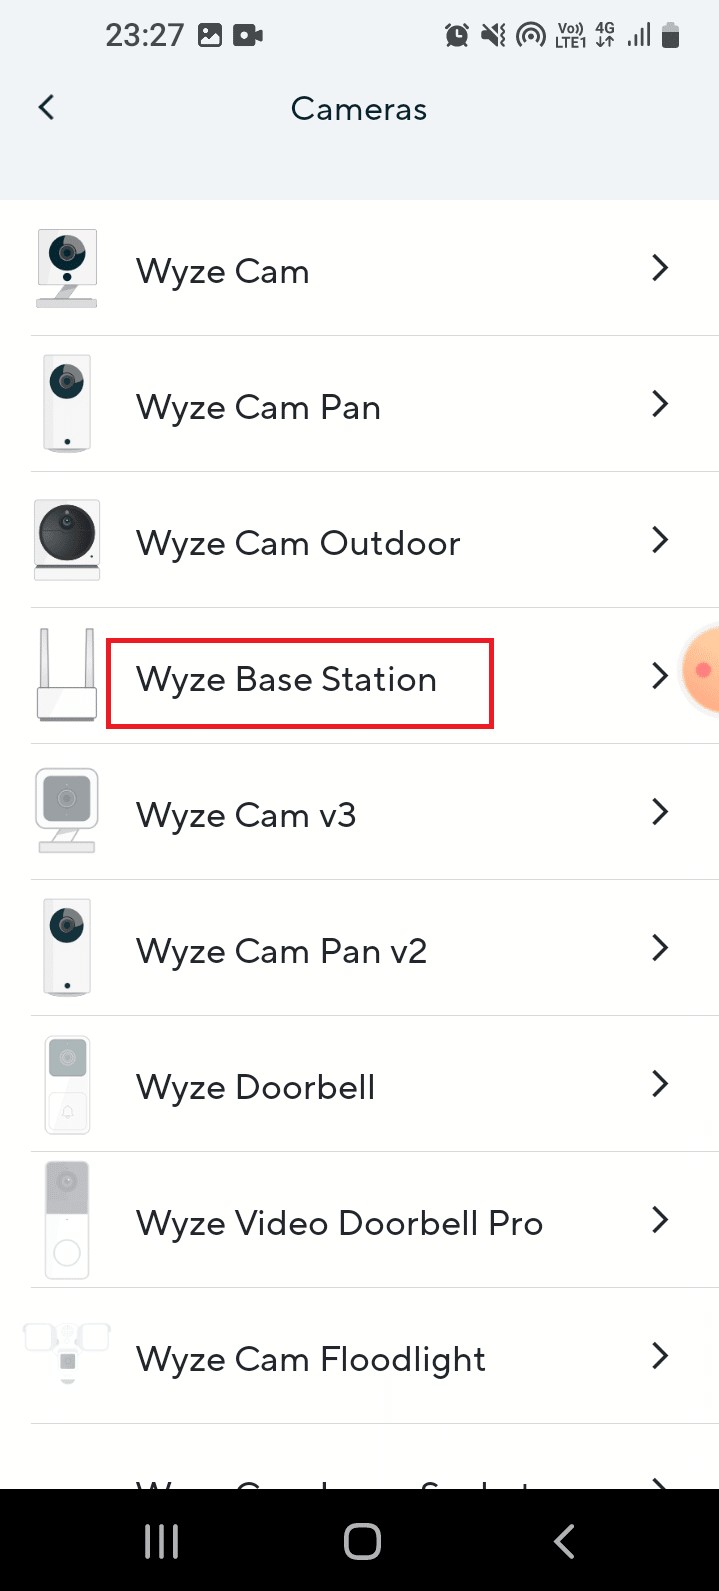 Sửa mã lỗi Wyze 06 trên Android